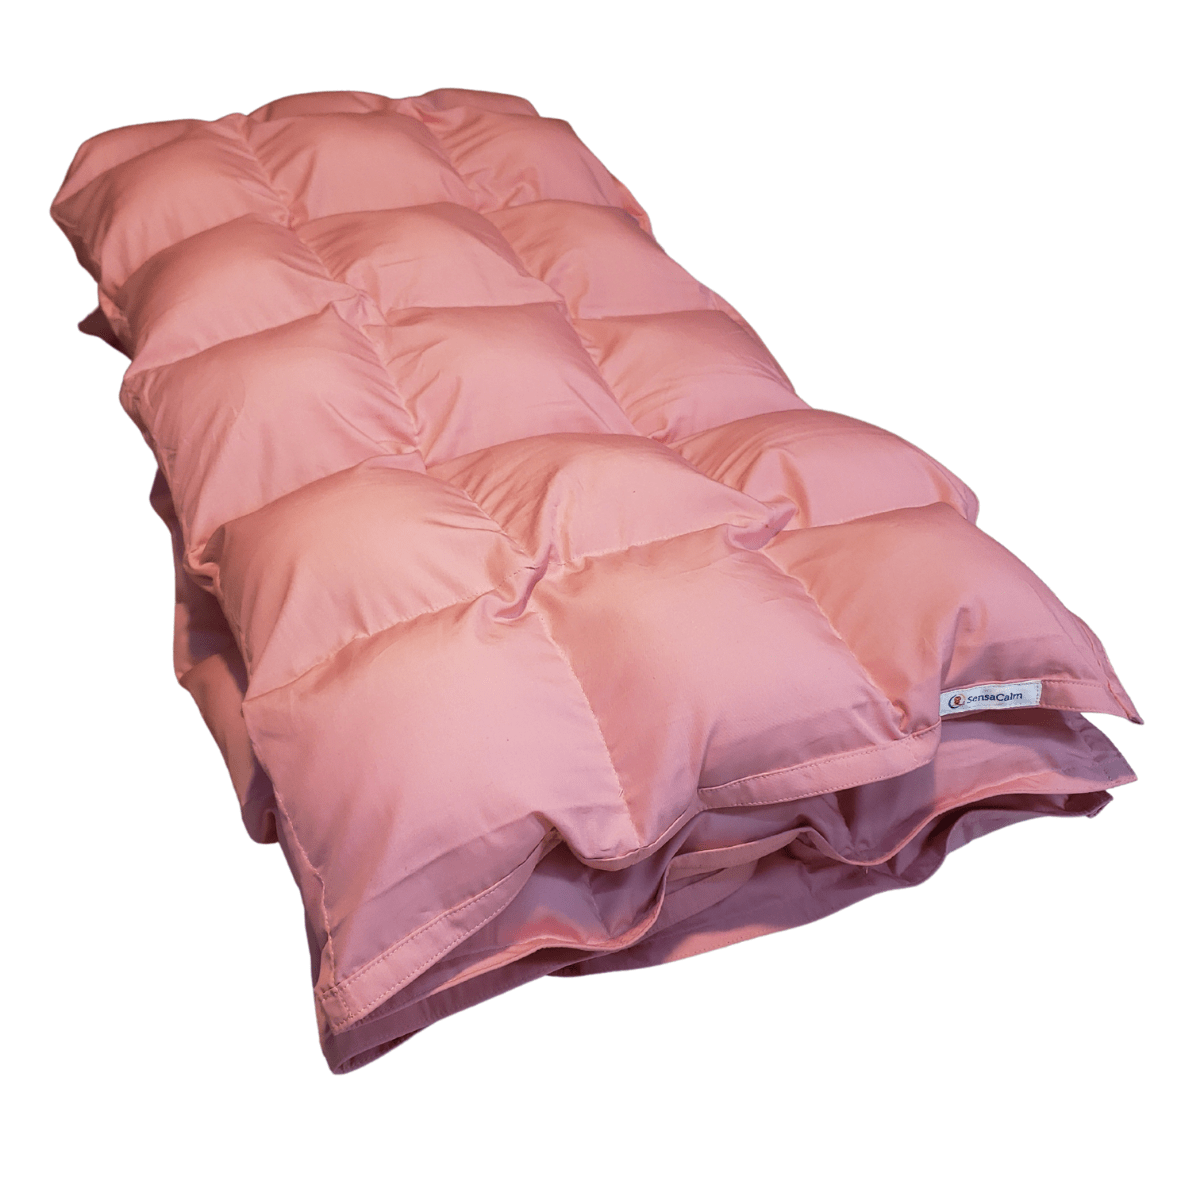 SensaCalm Weighted Blanket - Pink Custom Weighted Blanket